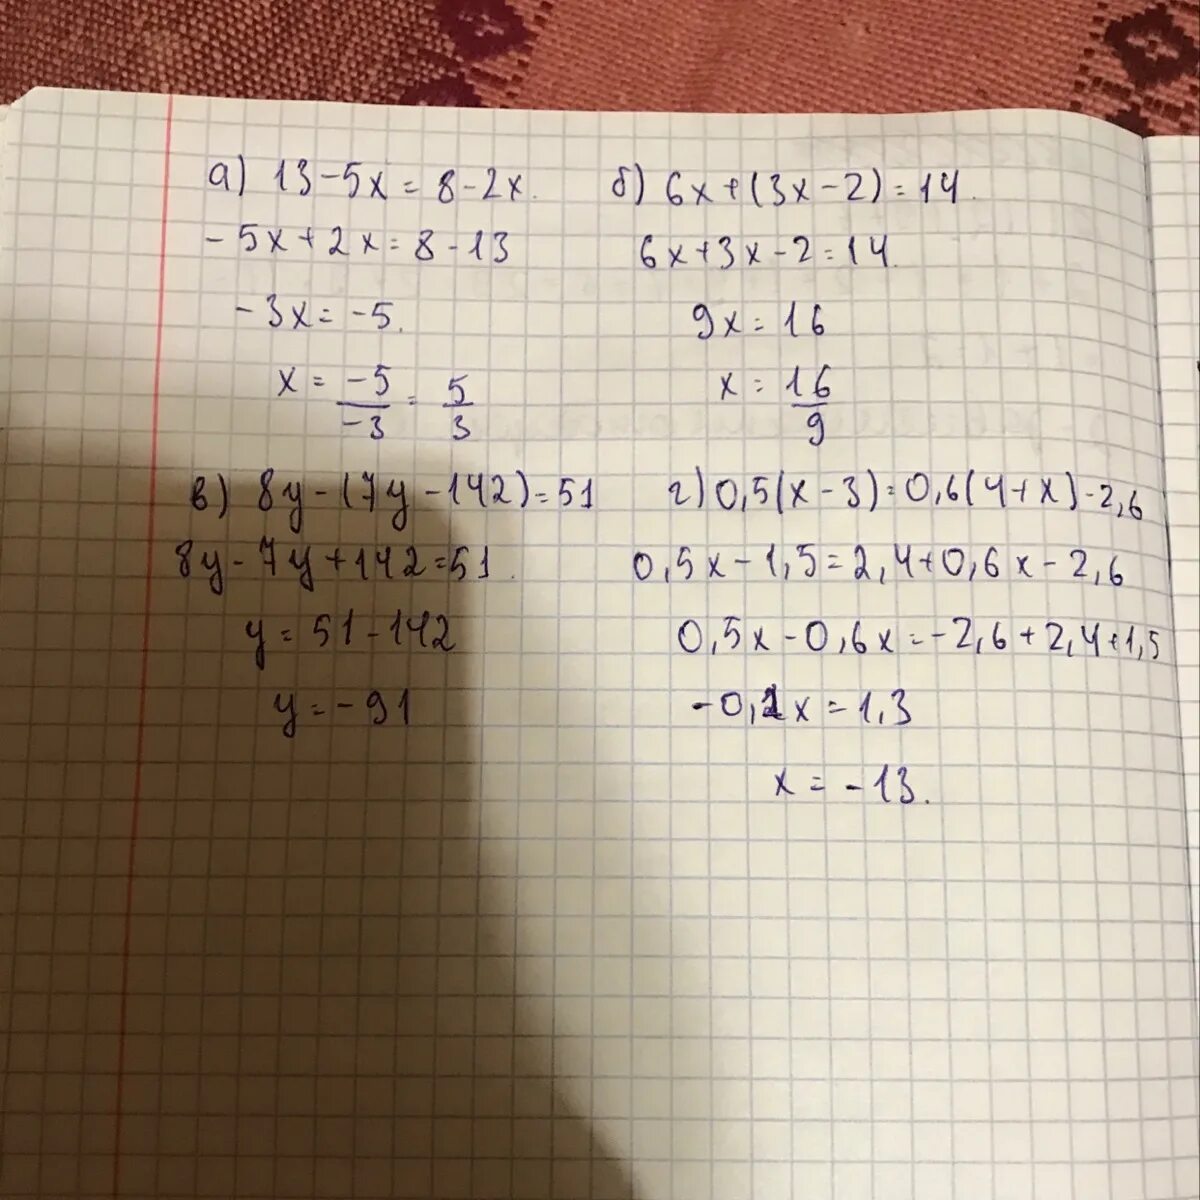 4x 20 0 x 5 1. 8х-(7х-142)=51. Решение уравнения x+2x+6x+(6x-13)=77. Решить уравнение:x+(-6)=5. 3x+(5x+7)=15 решение.